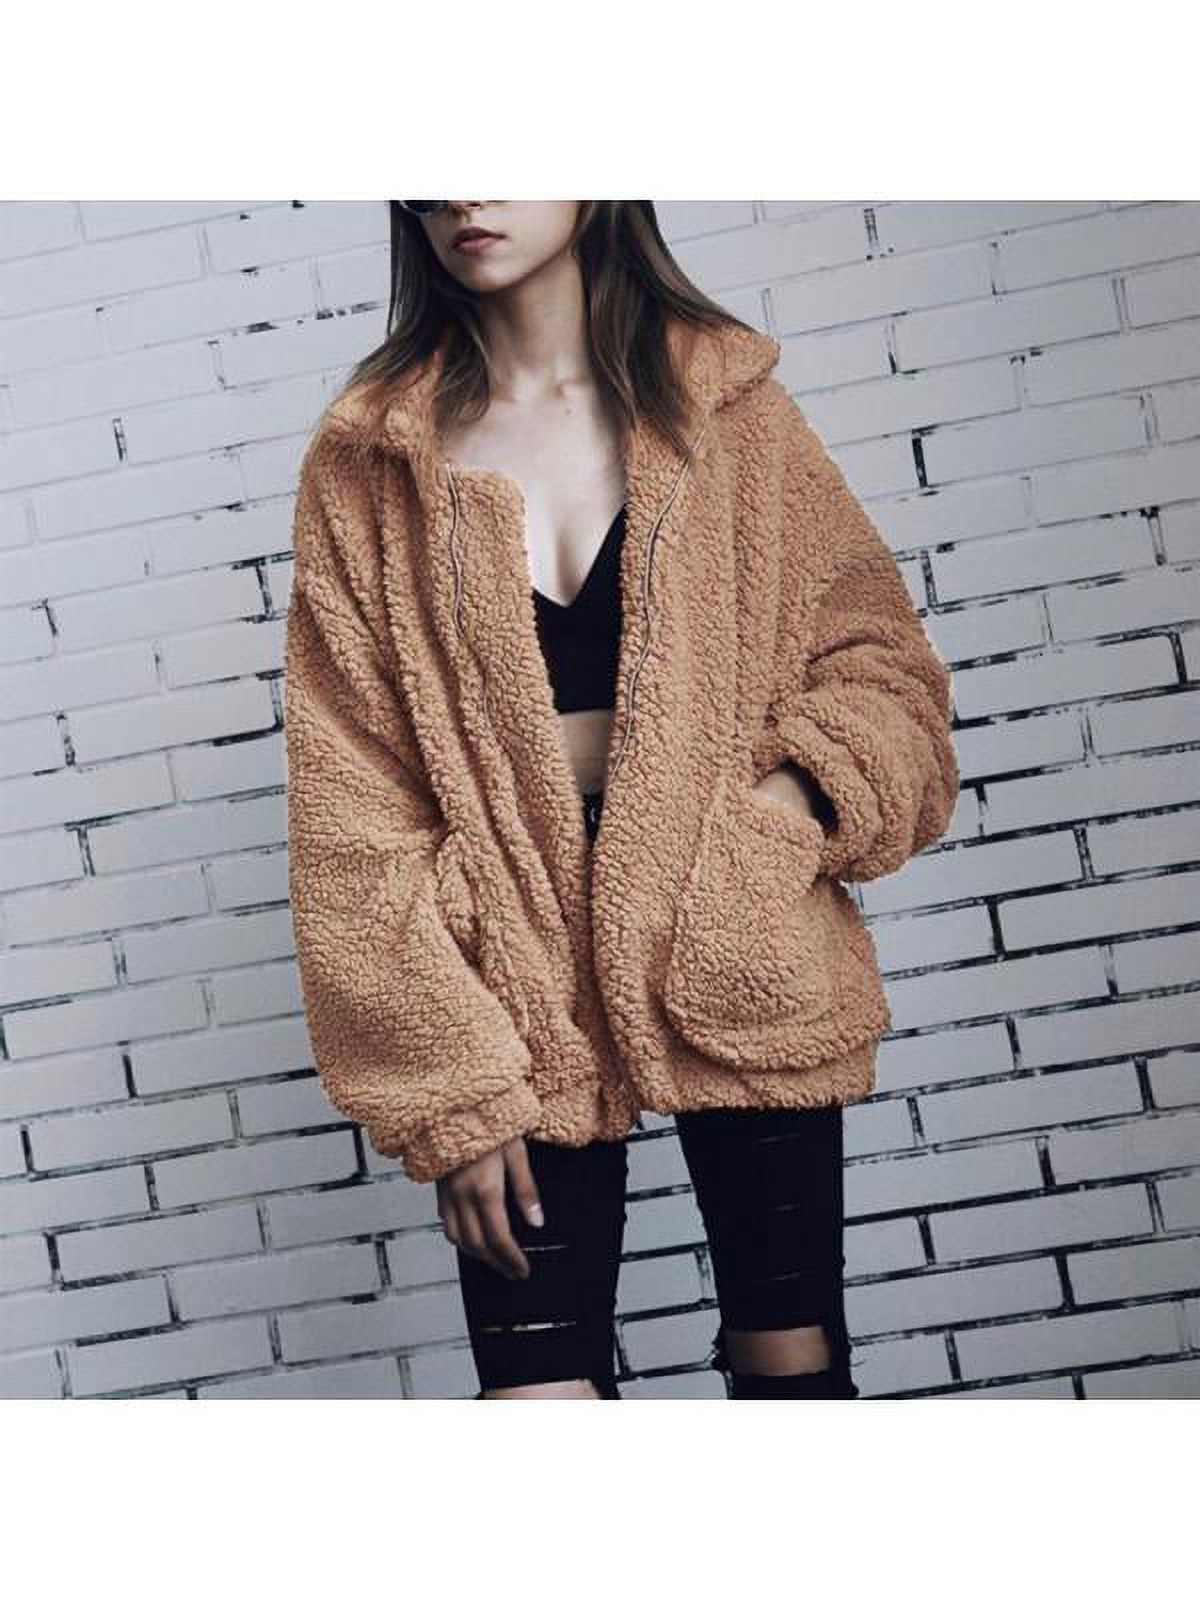 Women Fashionable Loose Lapel Cozy Jacket Coat Long Sleeve Autumn Winter Warm Zipper Plush Outwear - image 5 of 6